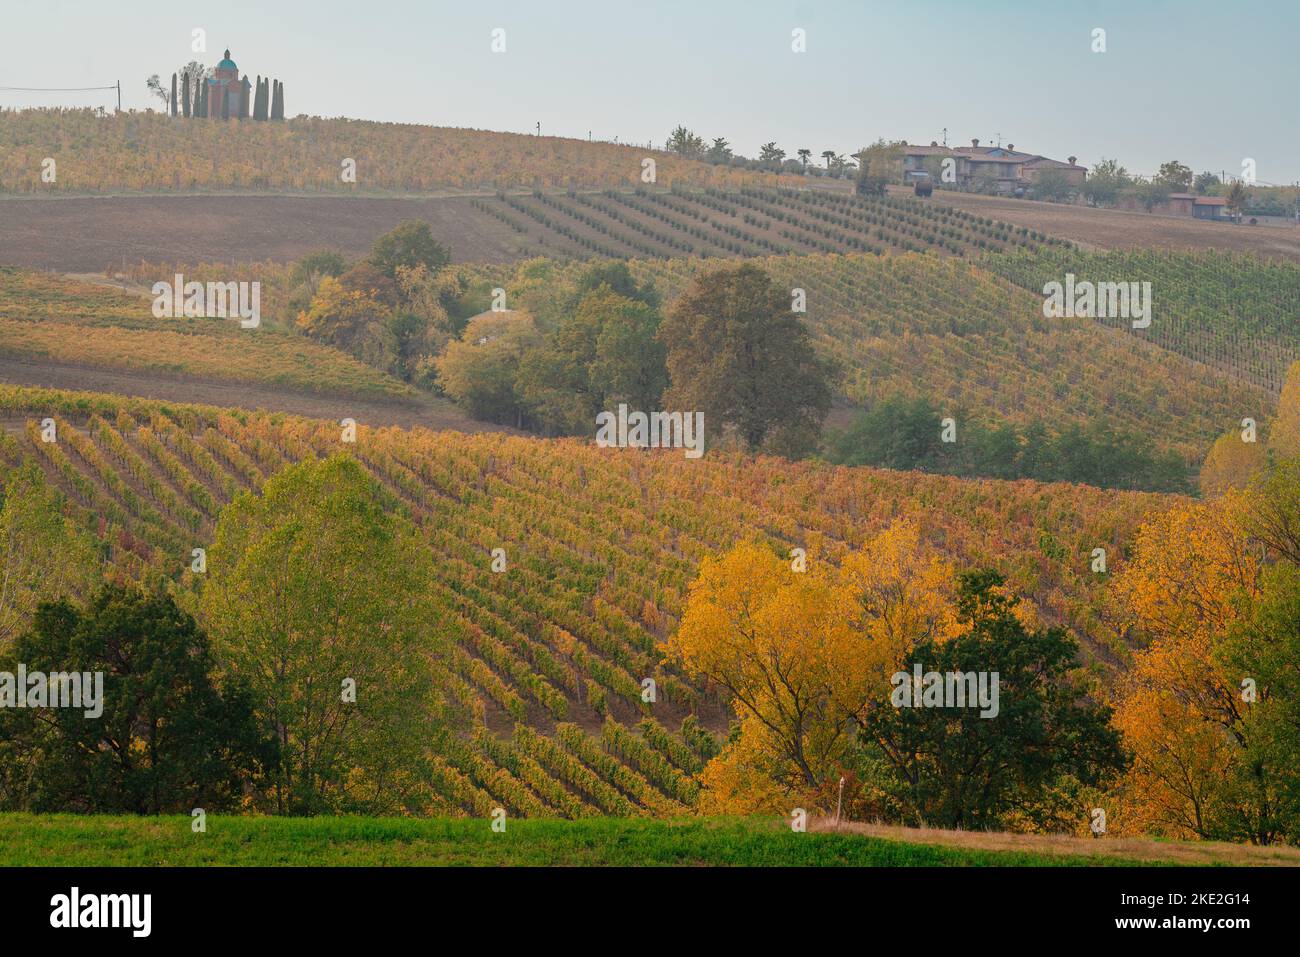 Colli piacentini hills in Italy. Vineyards in autumn Stock Photo